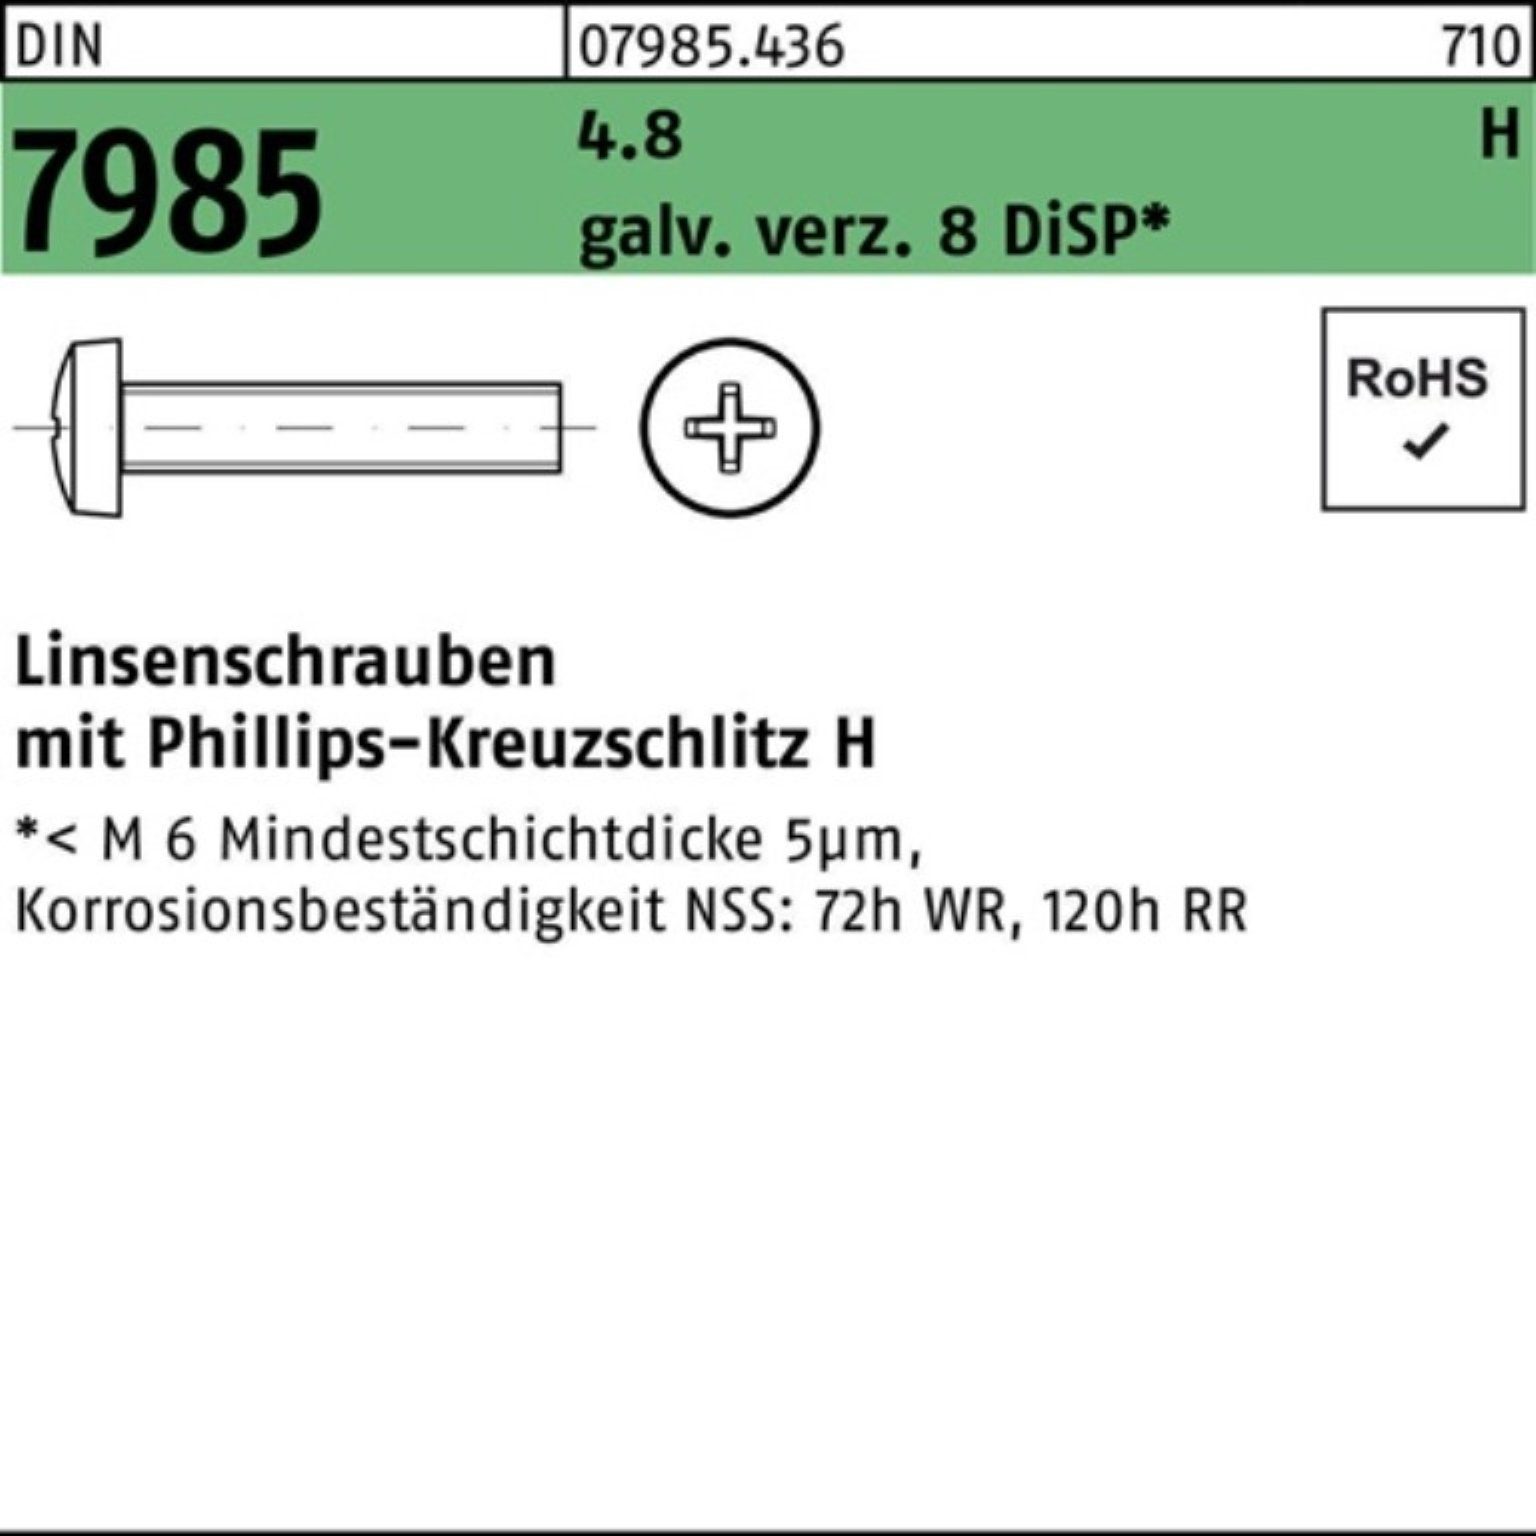 DIN Pack Linsenschraube 2000er 2 7985 Reyher 8 Linsenschraube DiSP M5x10-H galv.verz. 4.8 PH